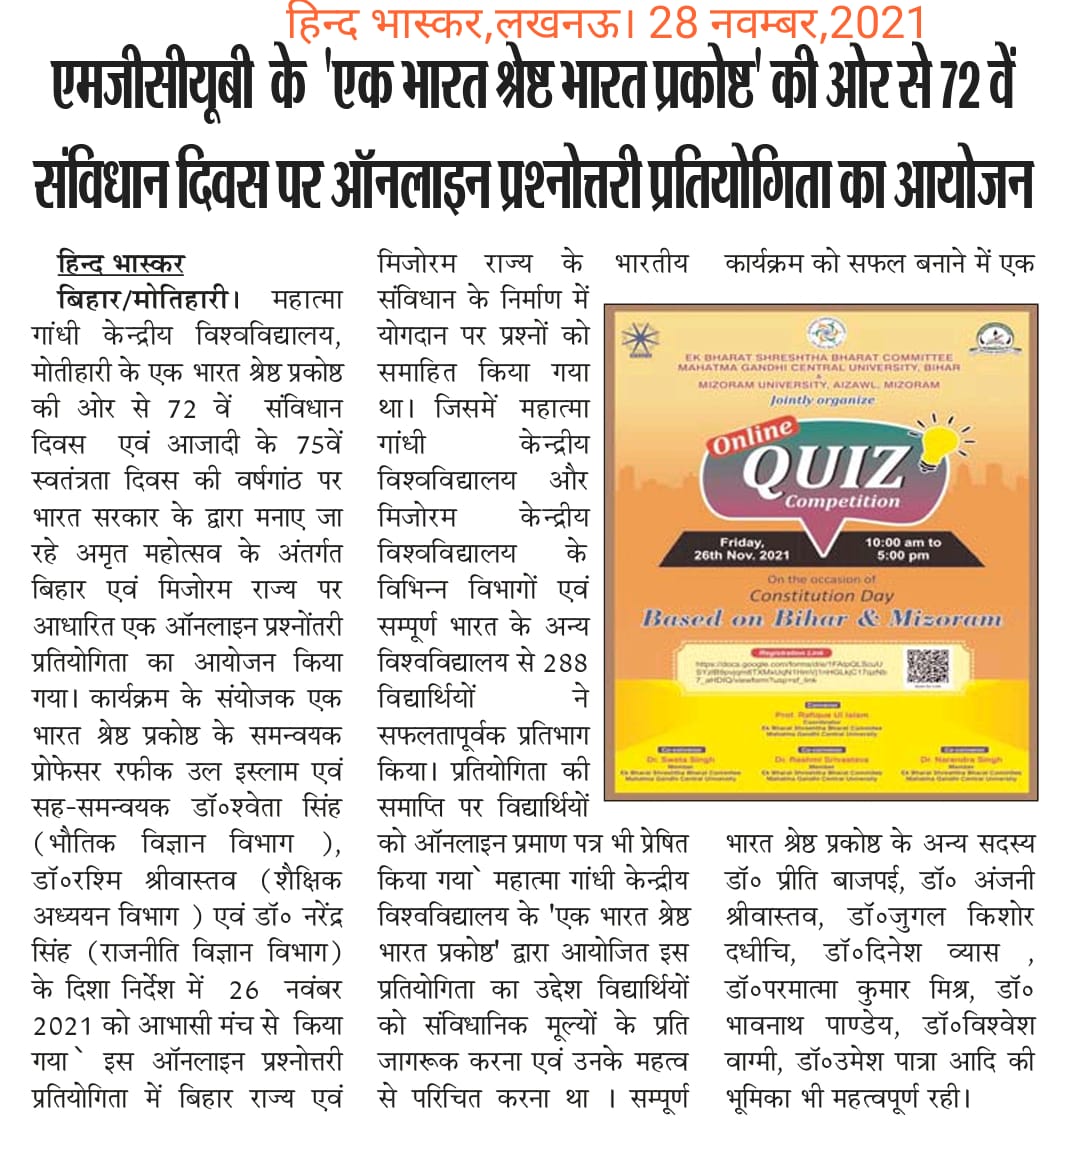 Quiz Competition organised by Ek Bharat Shreshtha Bharat